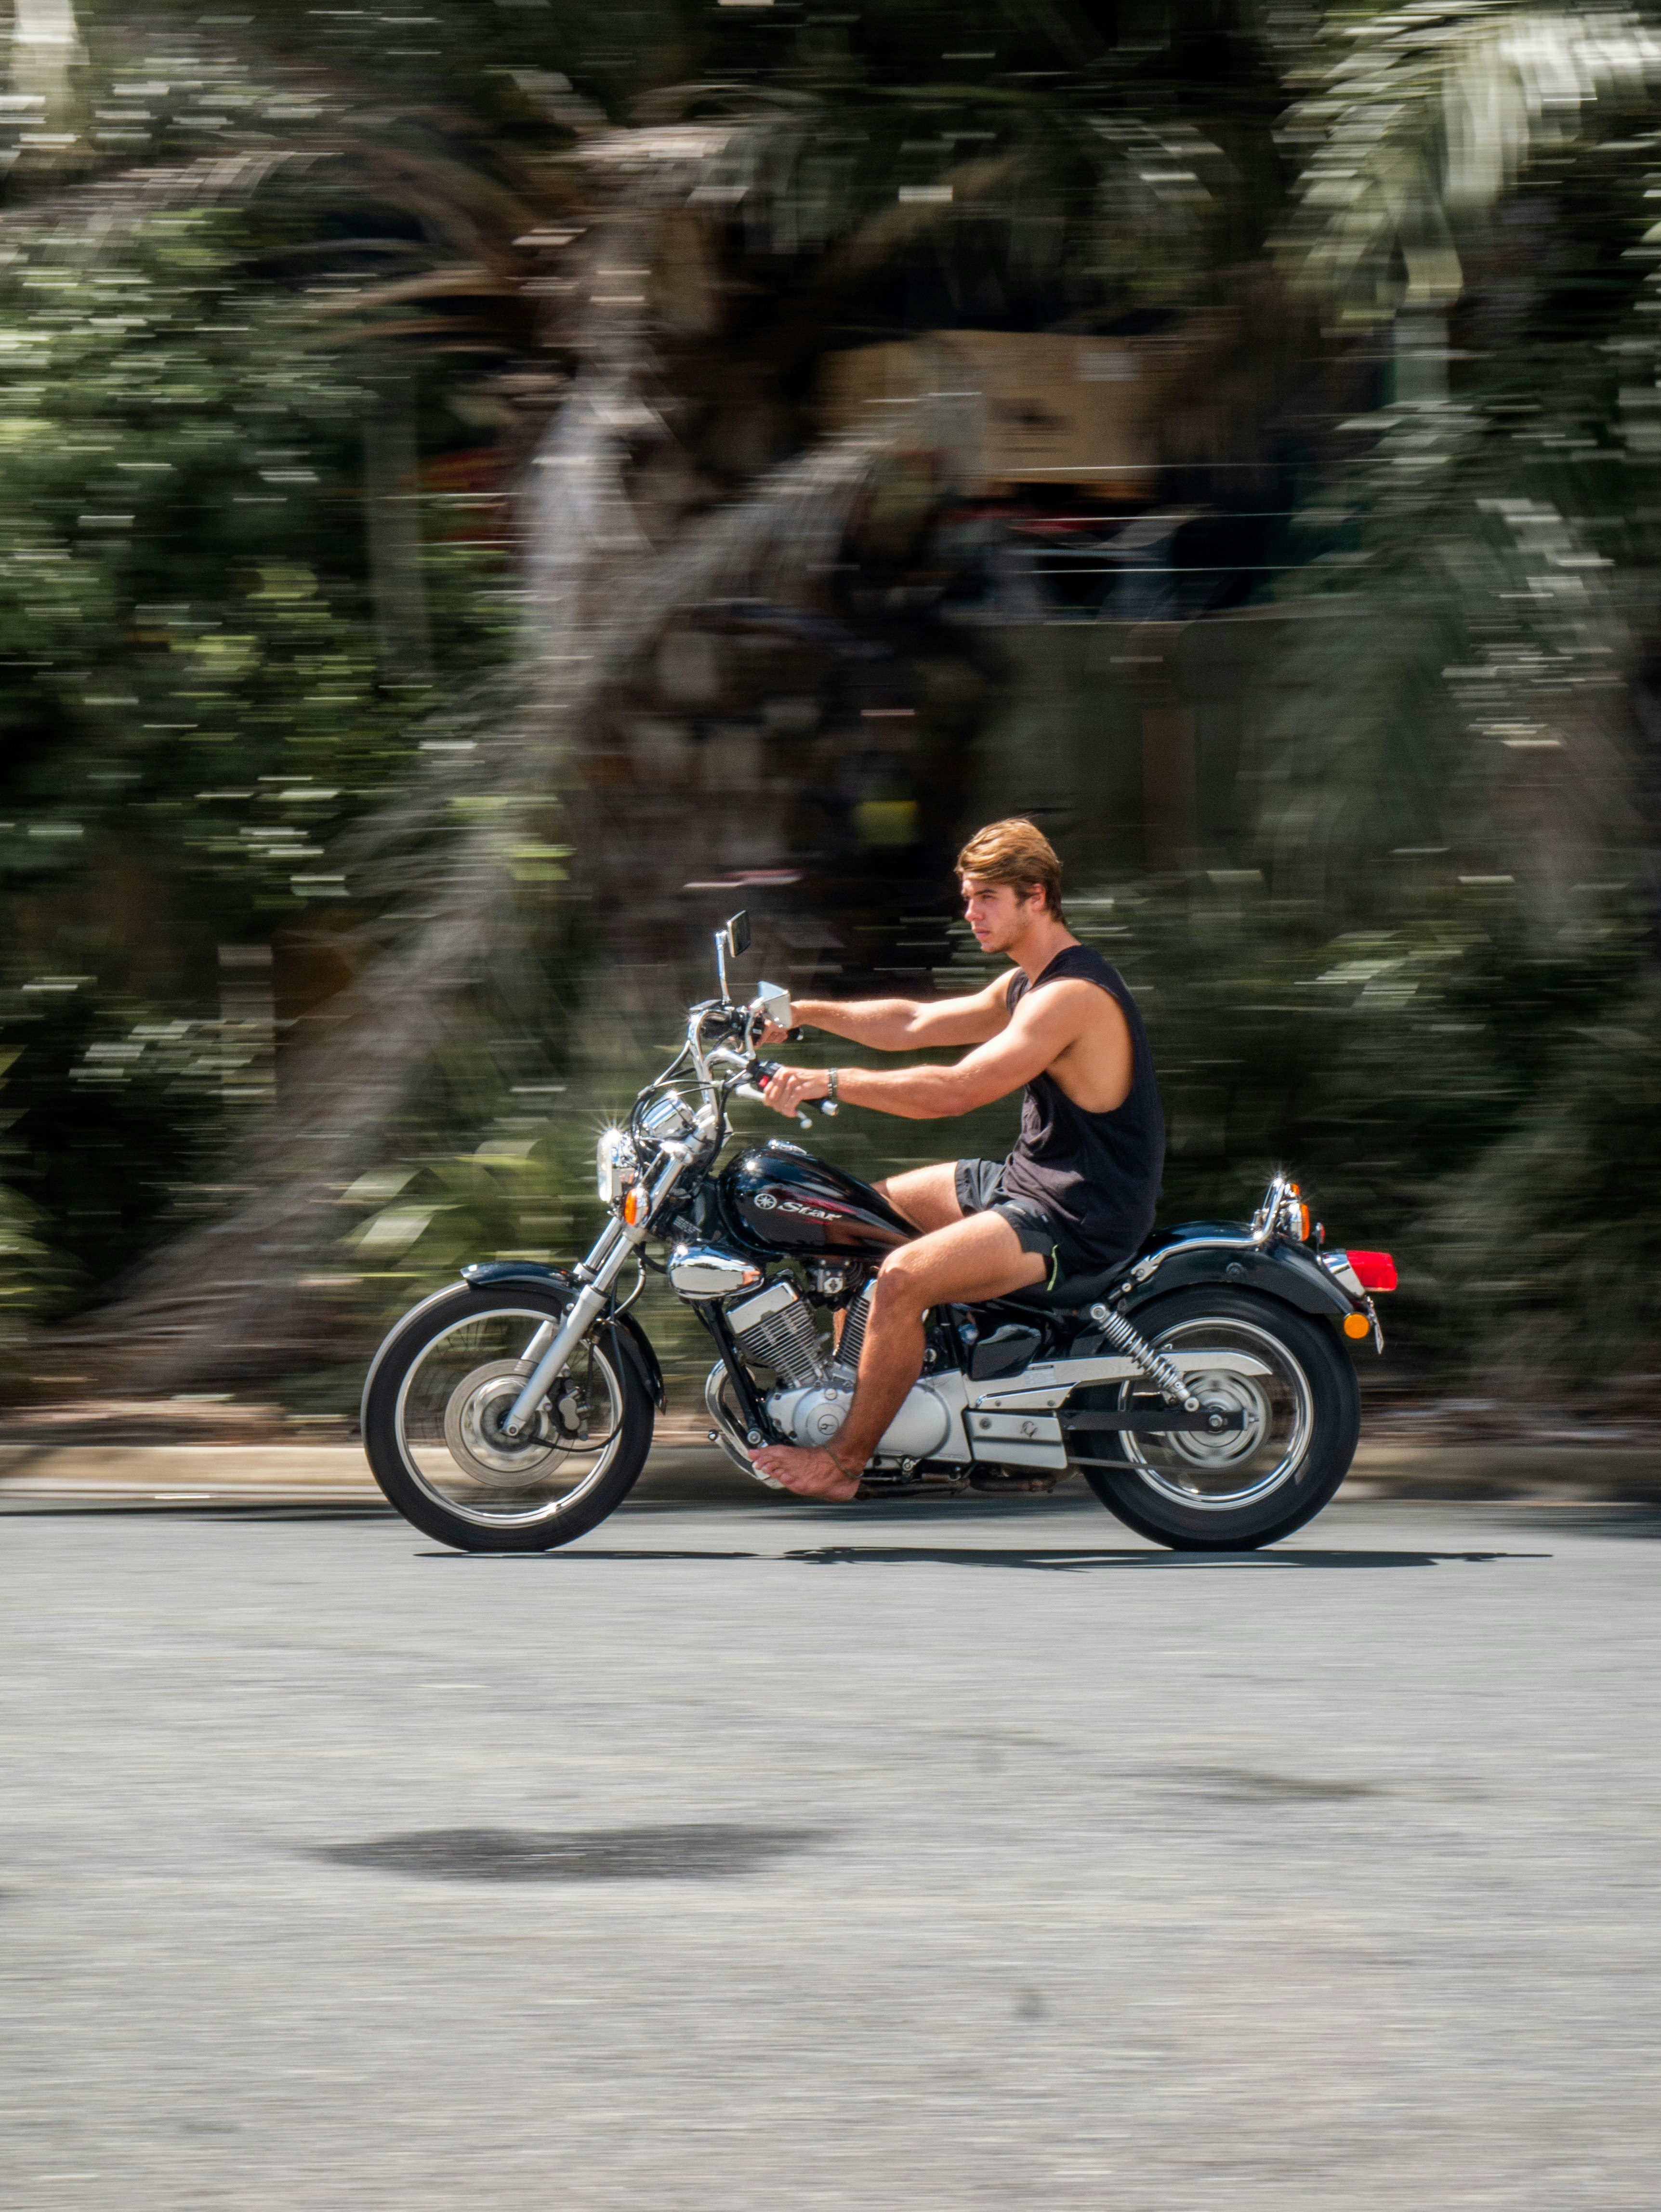 man in black shorts riding motorcycle on road during daytime